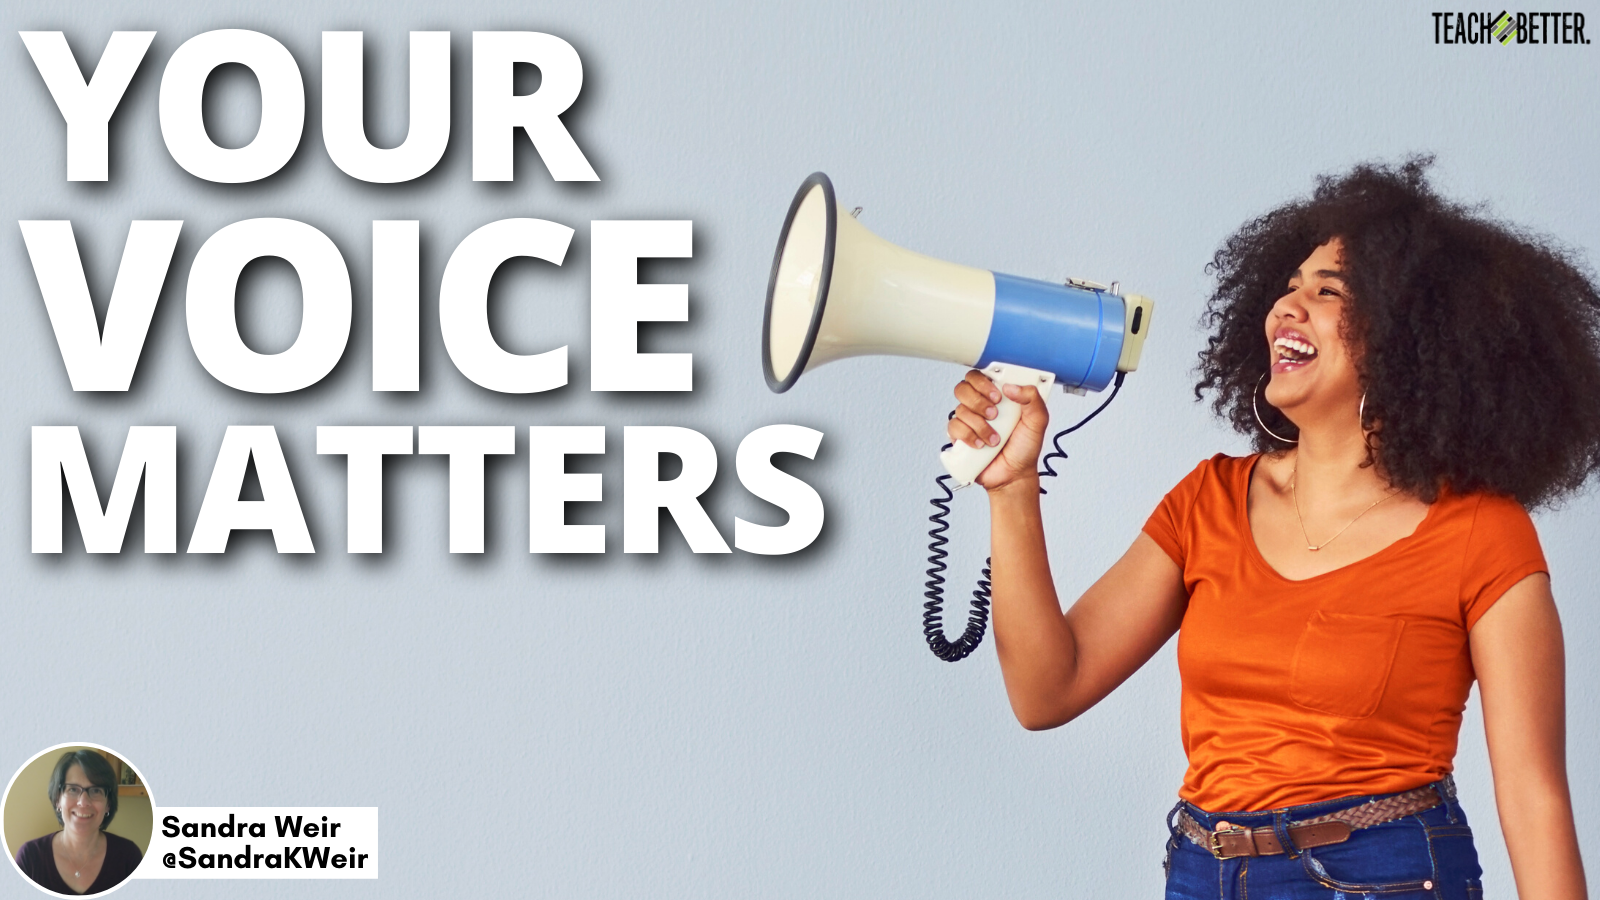 Your Voice Matters Teach Better